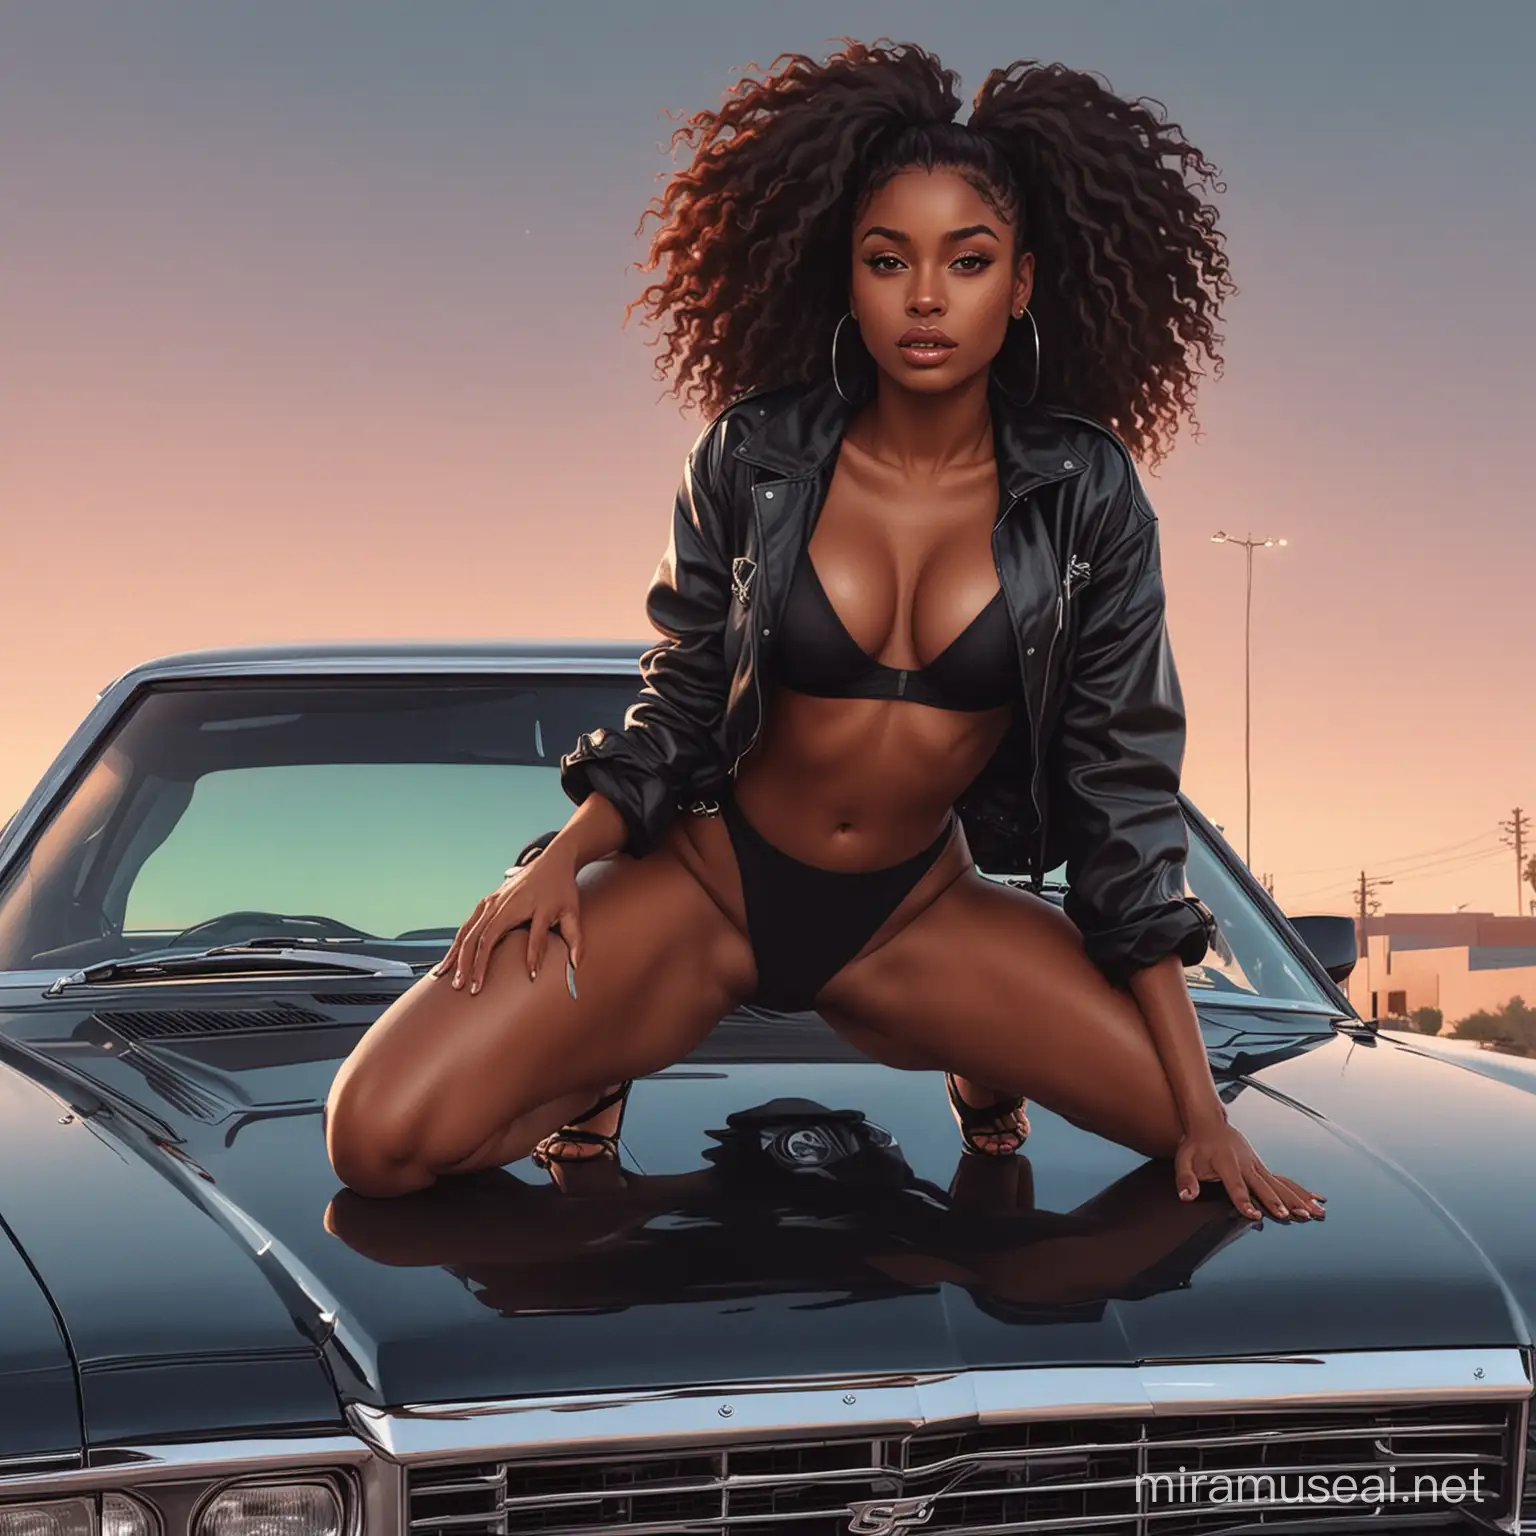 sexy black girl on car hood illustration